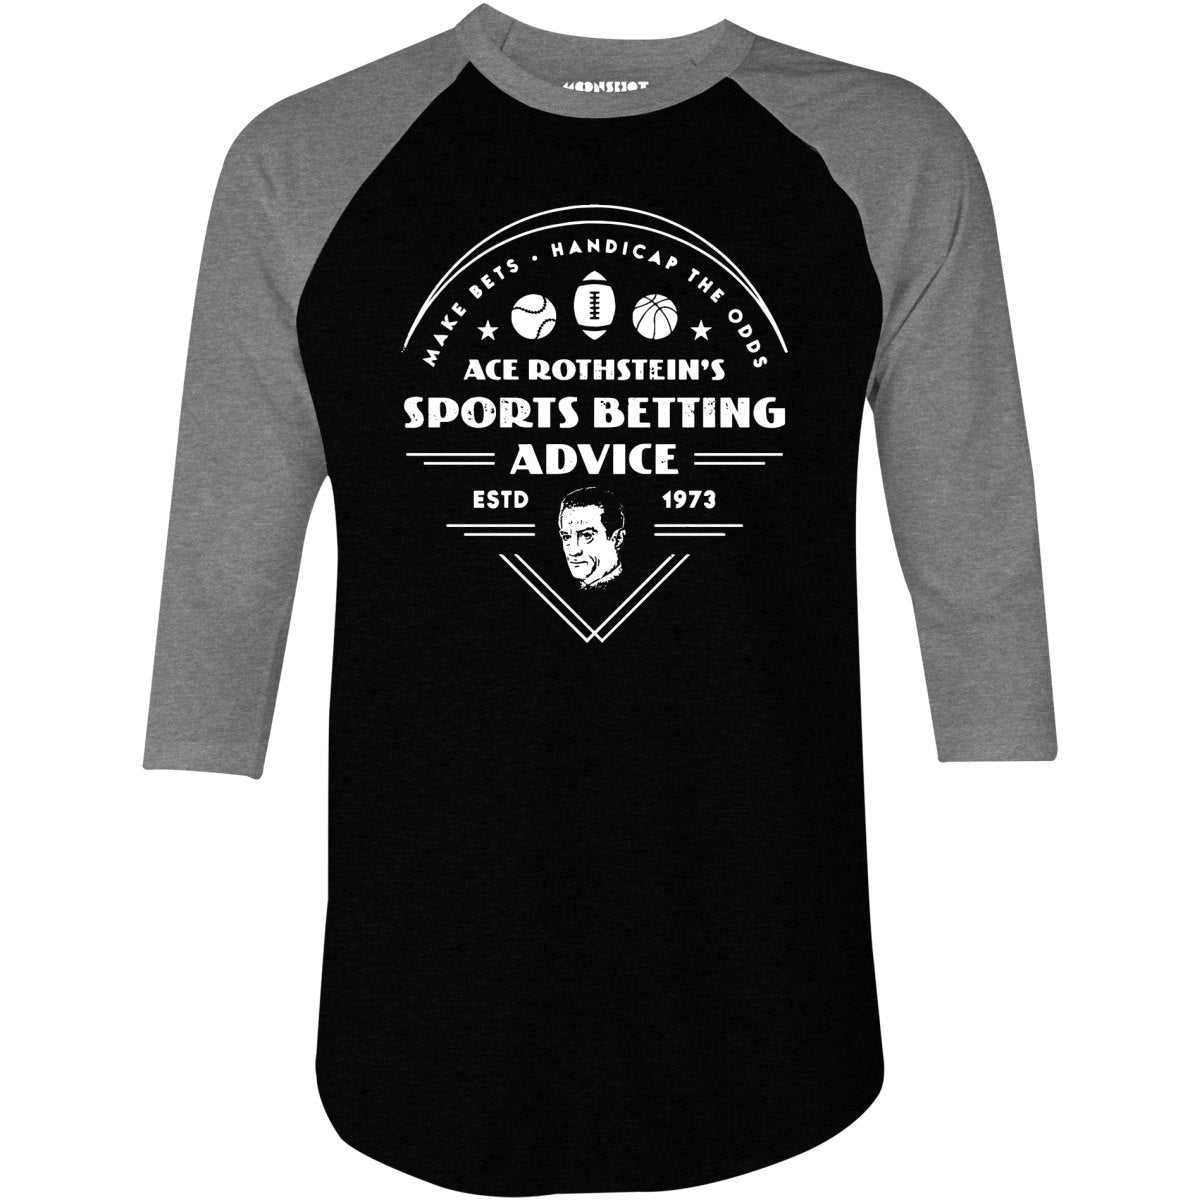 Ace Rothstein's Sports Betting Advice - 3/4 Sleeve Raglan T-Shirt